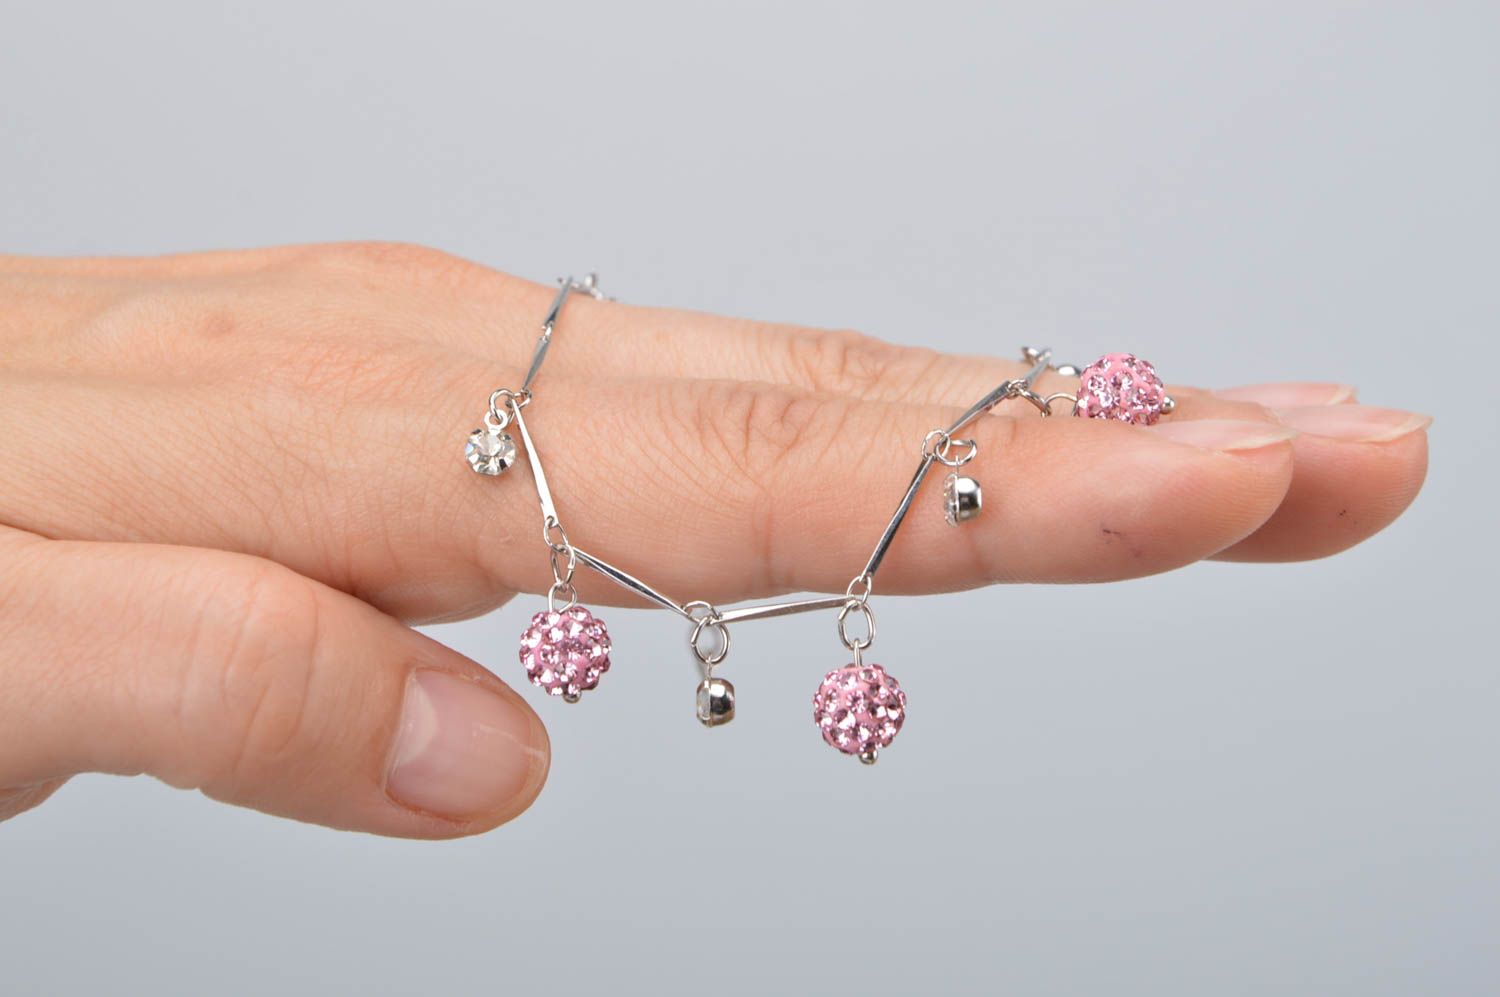 Metal bracelet handmade jewelry charm bracelet designer accessories gift for her photo 2